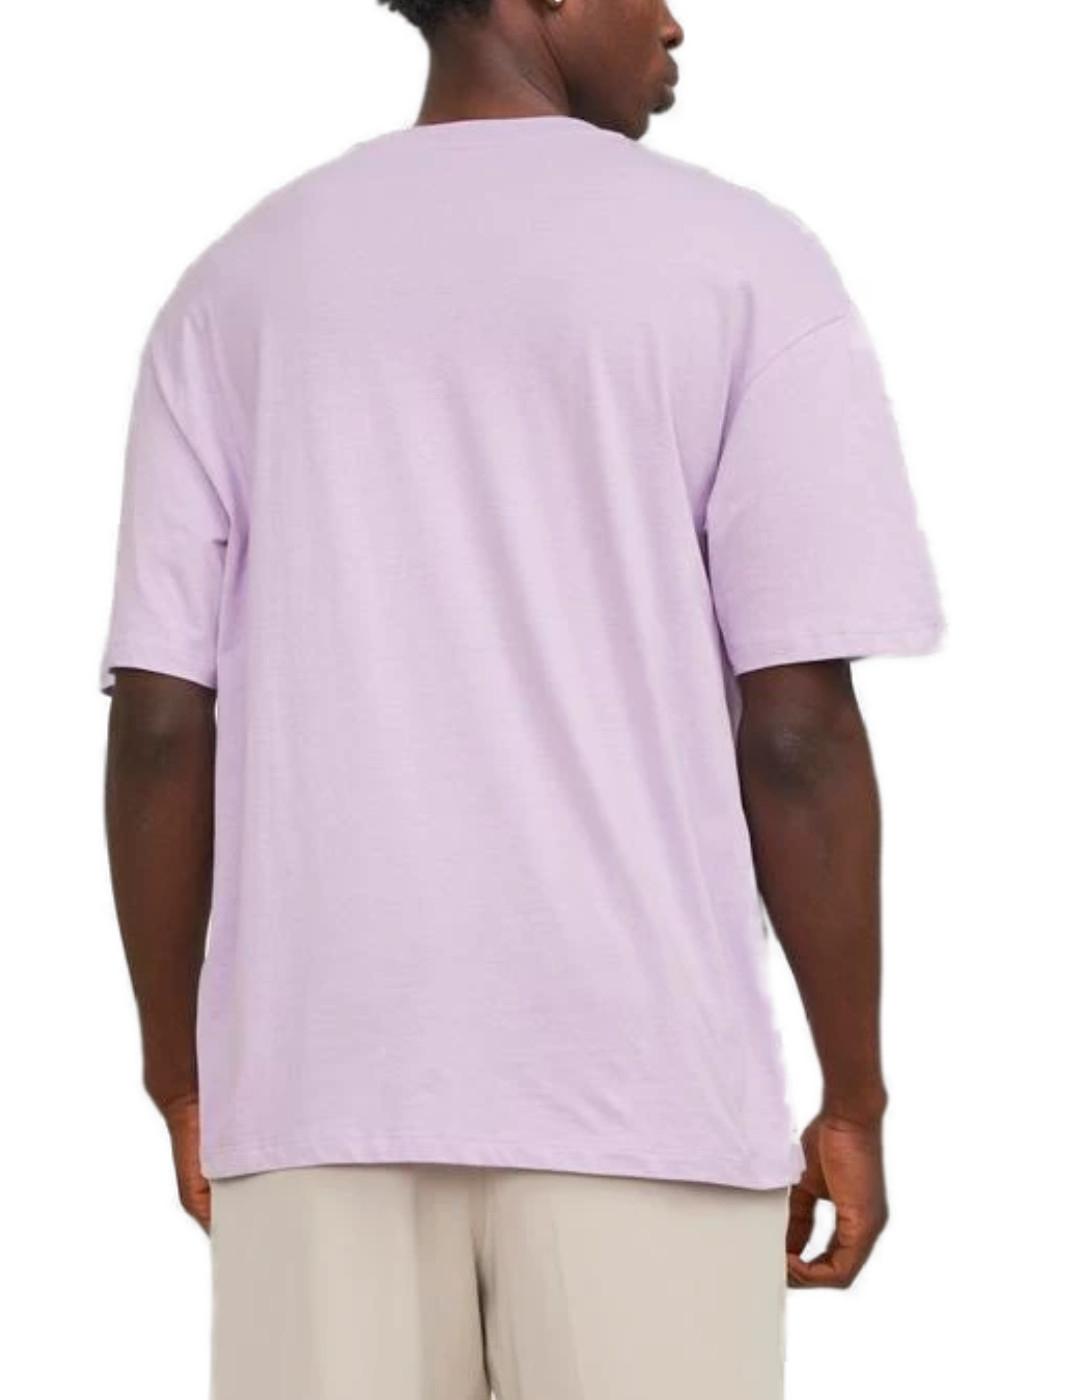 Camiseta Jack&Jones Brandley básica rosa manga corta hombre